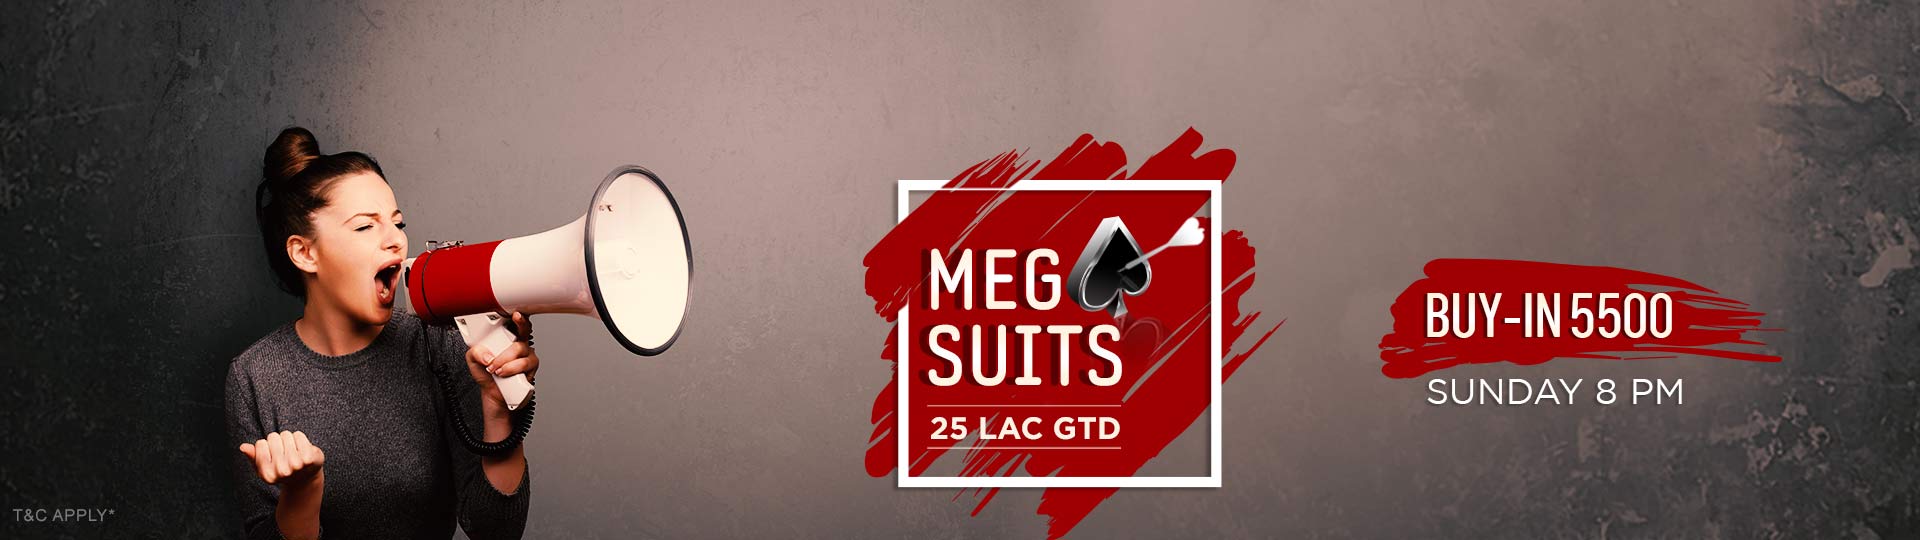 Mega Suits Sunday Poker Tournaments with 25 Lac Prizepool at Adda52.com